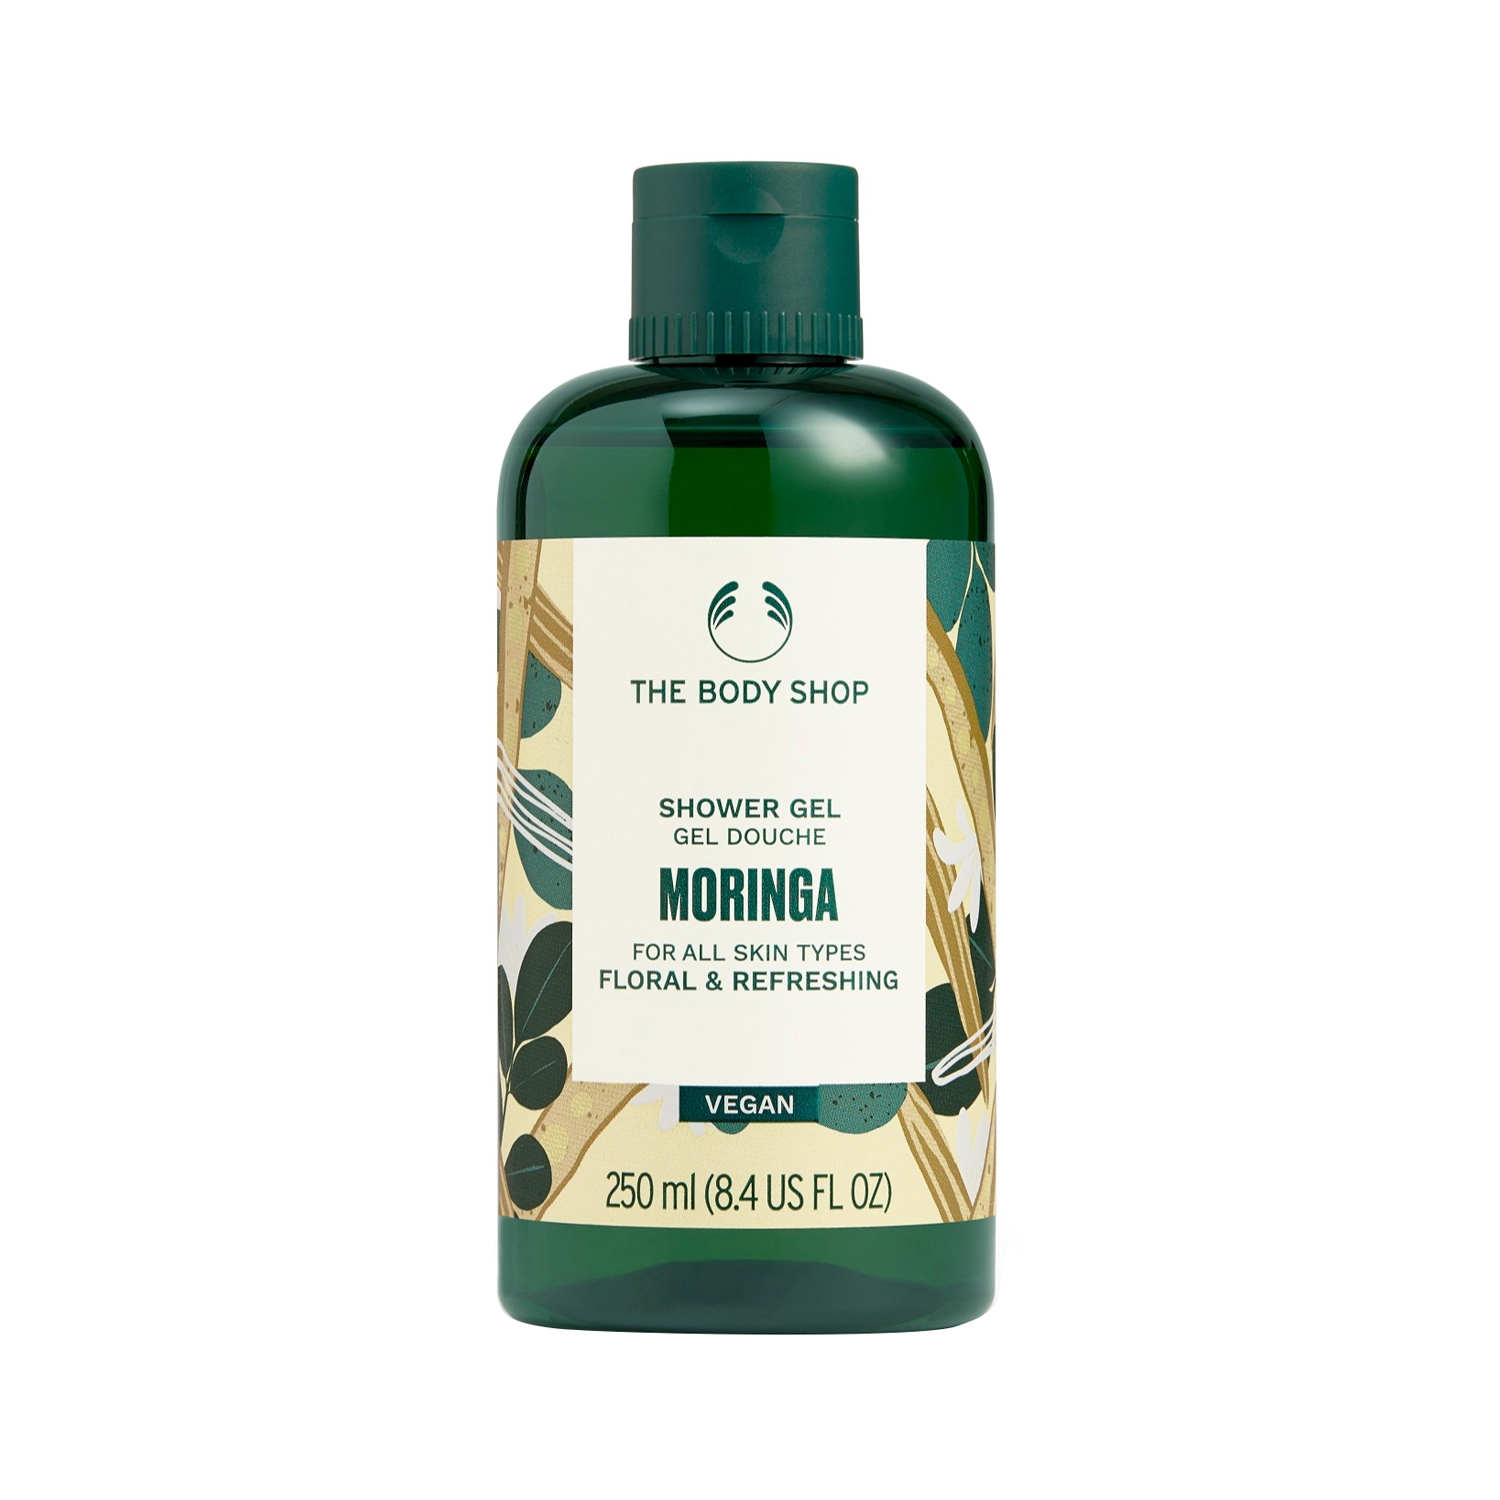 The Body Shop | The Body Shop Moringa Shower Gel (250ml)